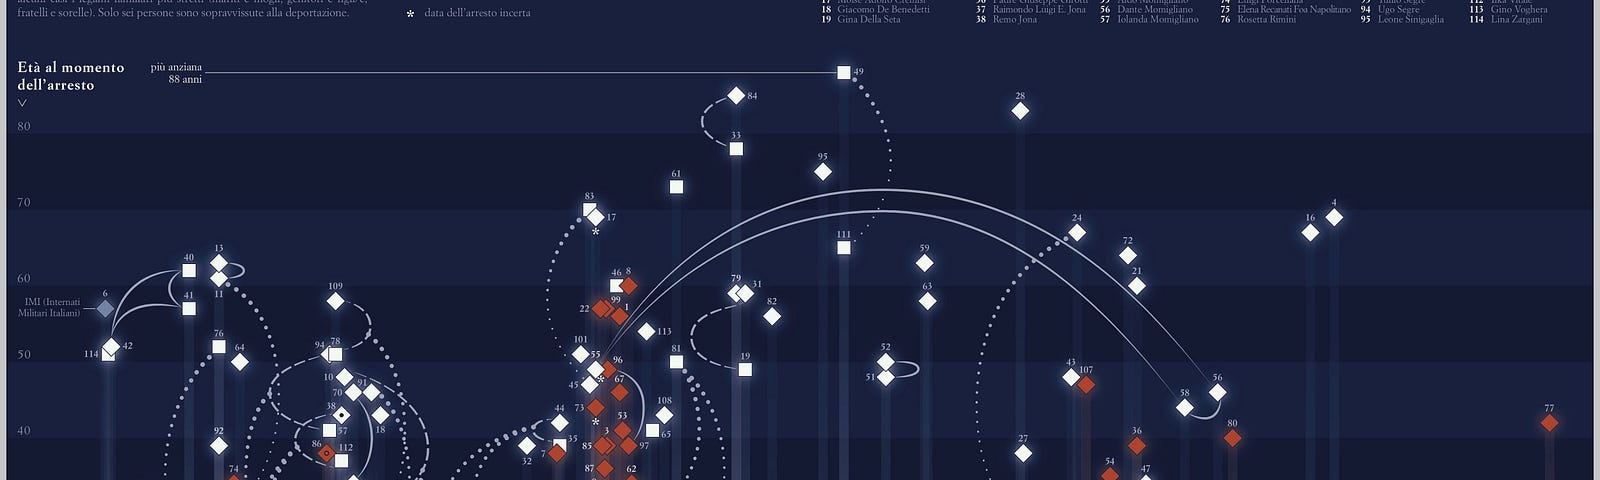 Data Visualization by Michela Lazzaroni, produced by Wild Mazzini